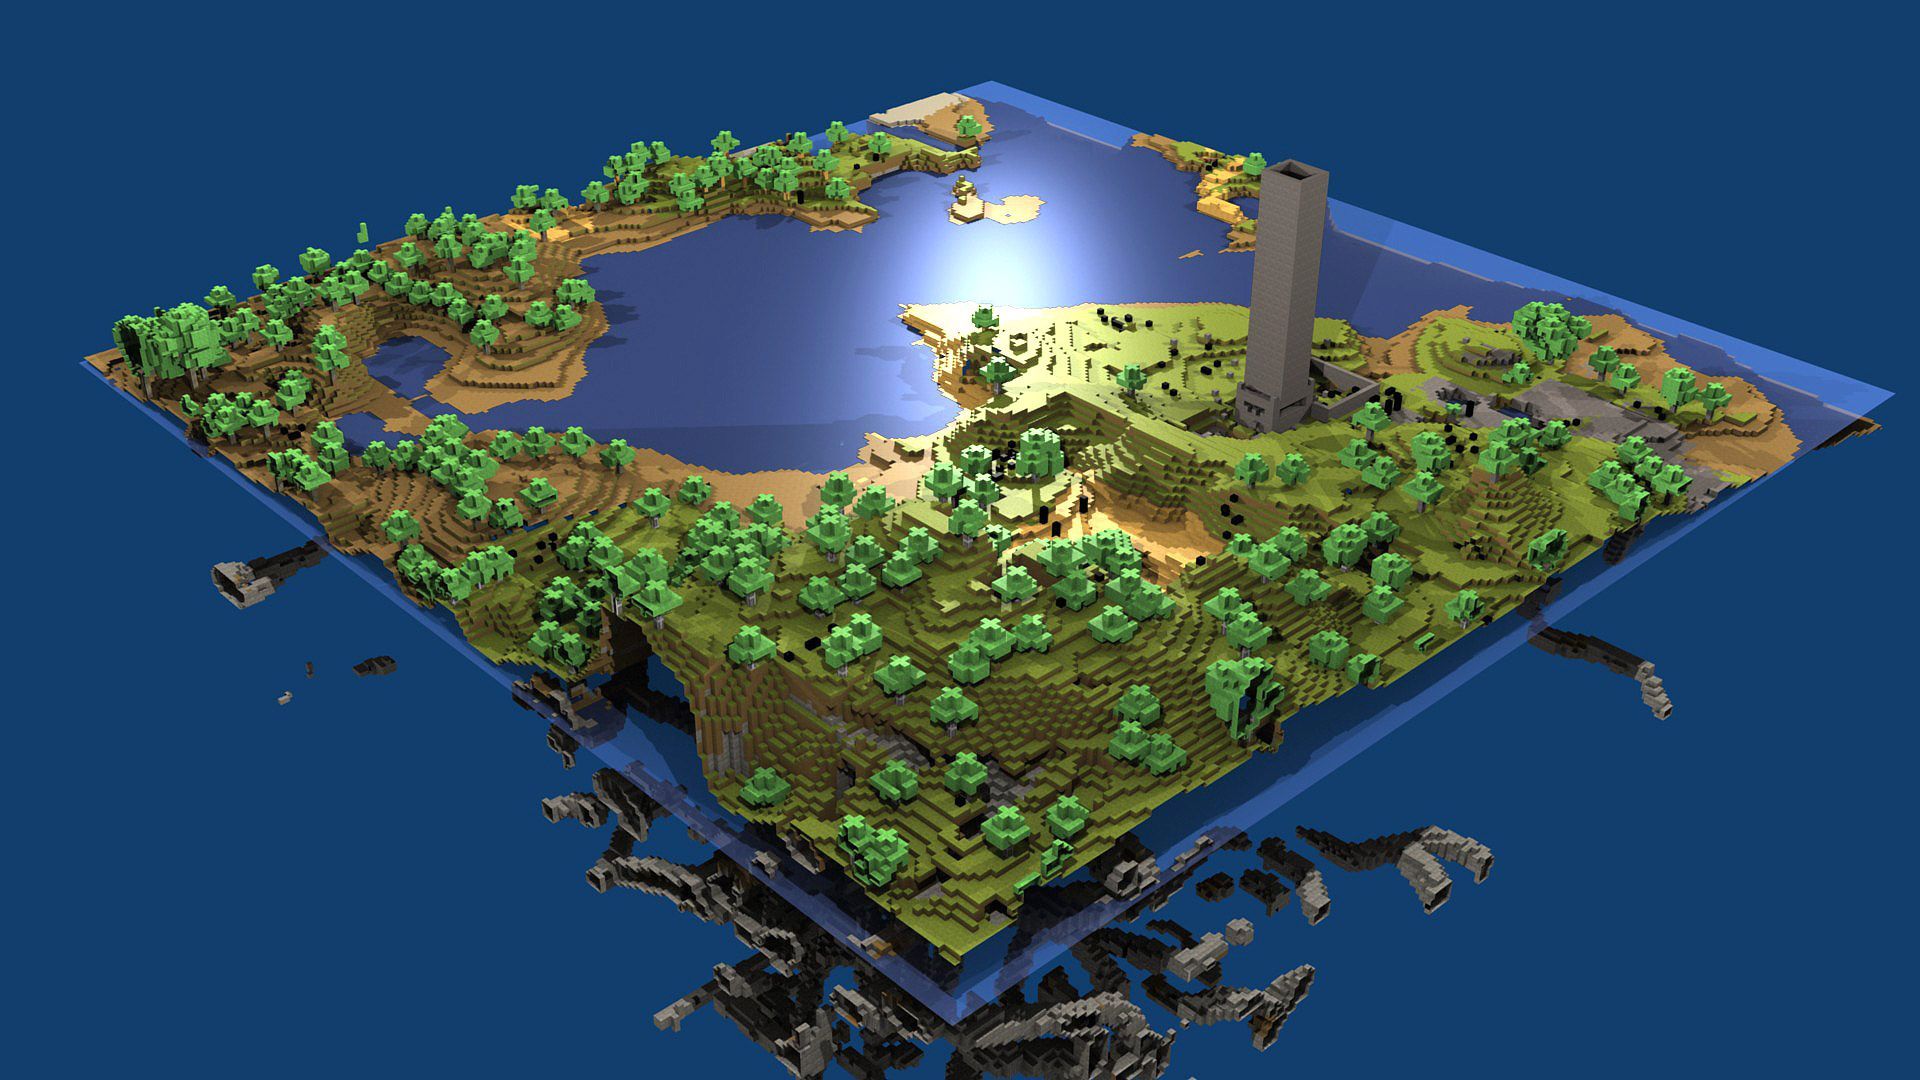 Minecraft Images Desktop Wallpaper - Ehiyo.com